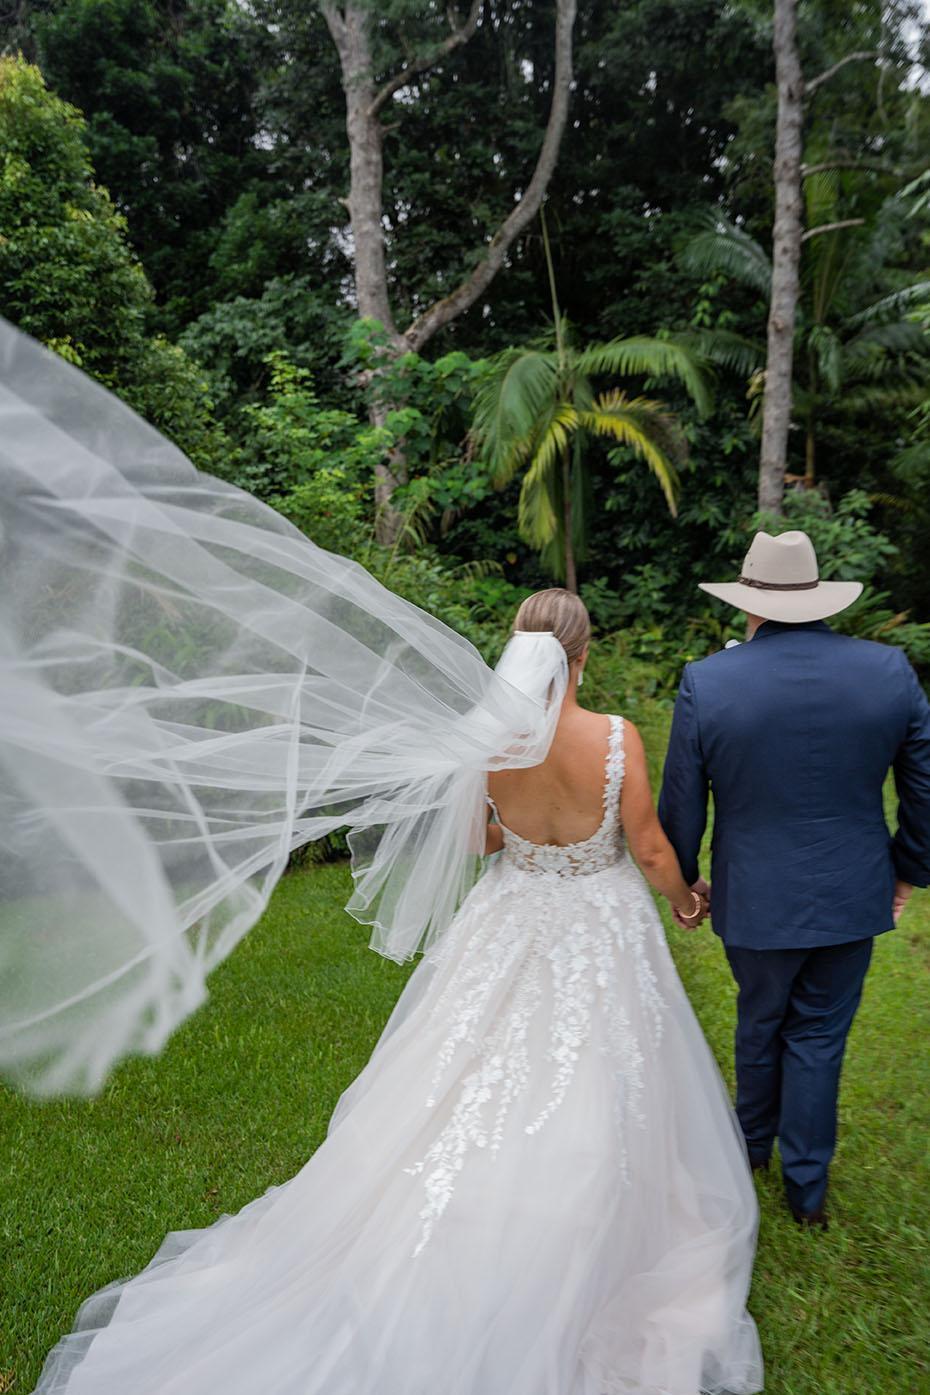 Wedding Photography - Flowing Veil as couple walks away